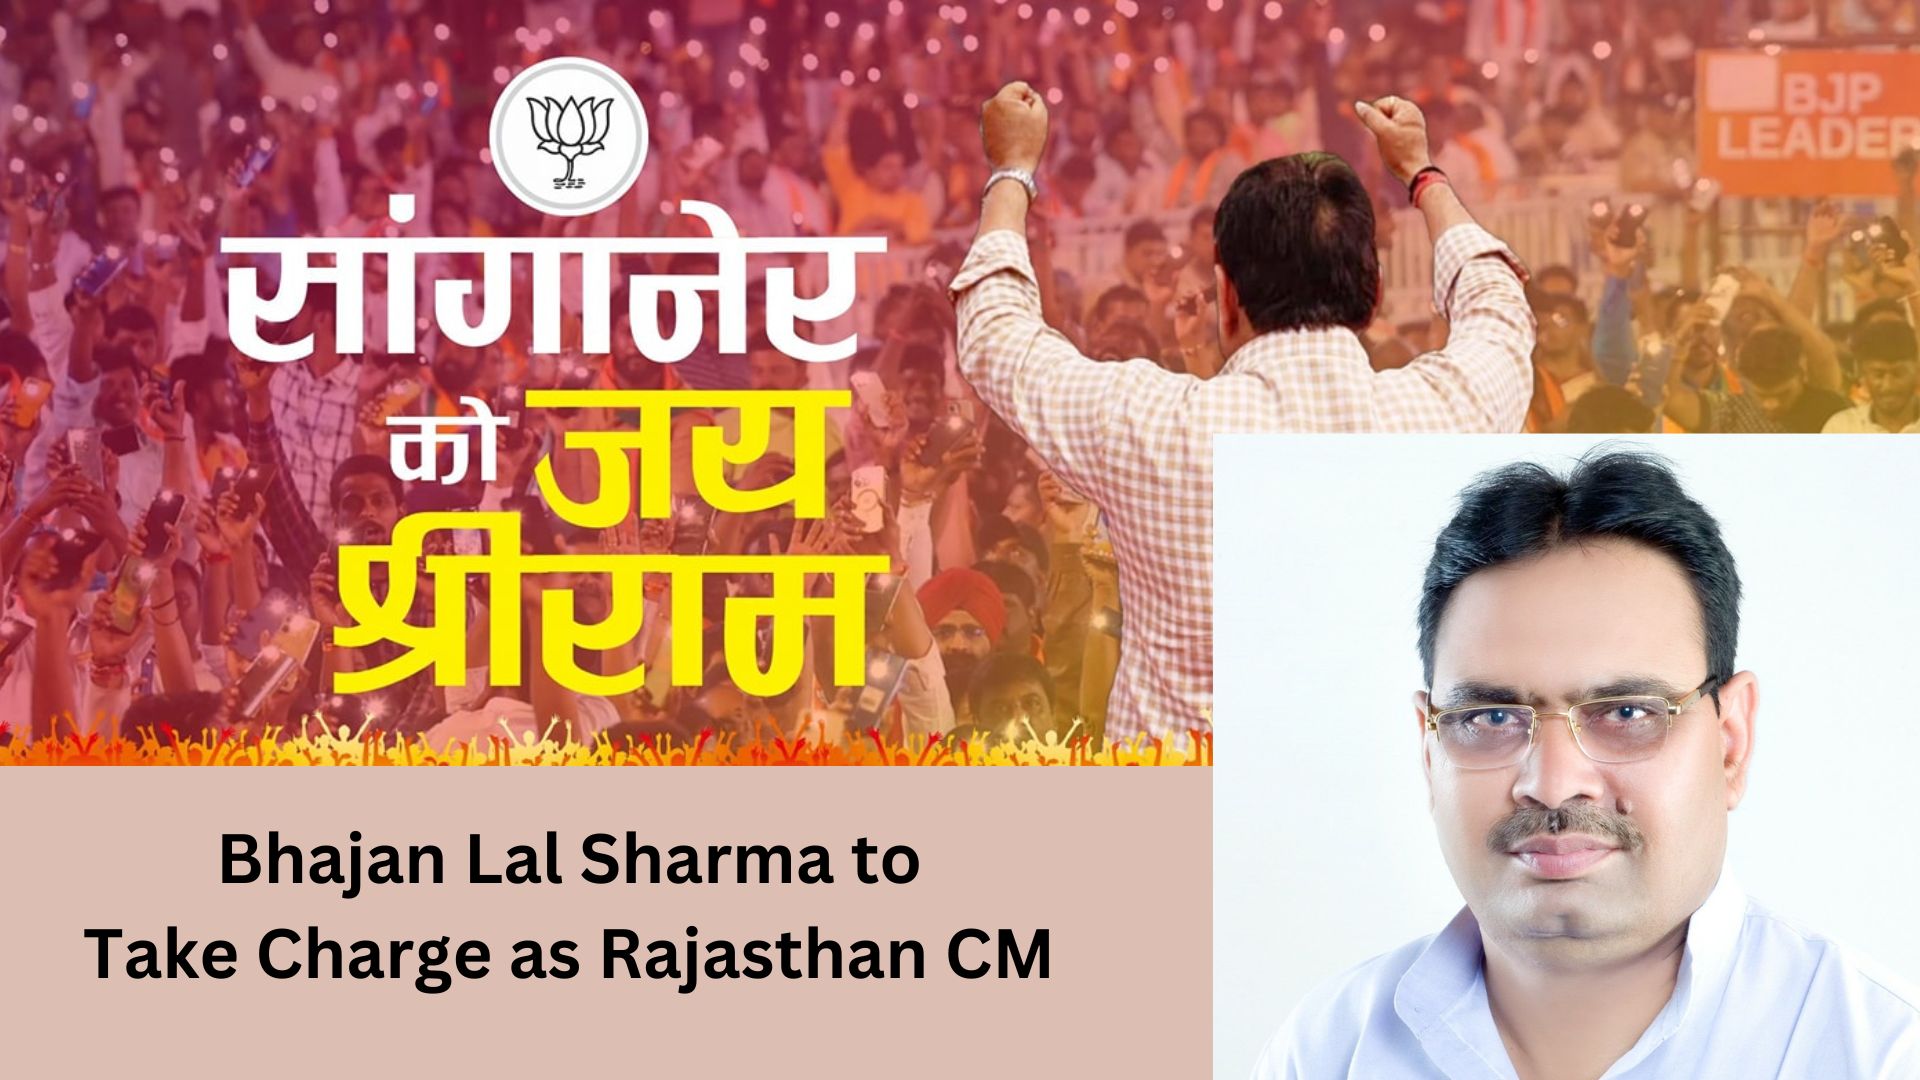 Bhajan Lal Sharma Elected as Rajasthan’s Chief Minister, Diya Kumari and Prem Chand Bairwa Named Deputy CMs